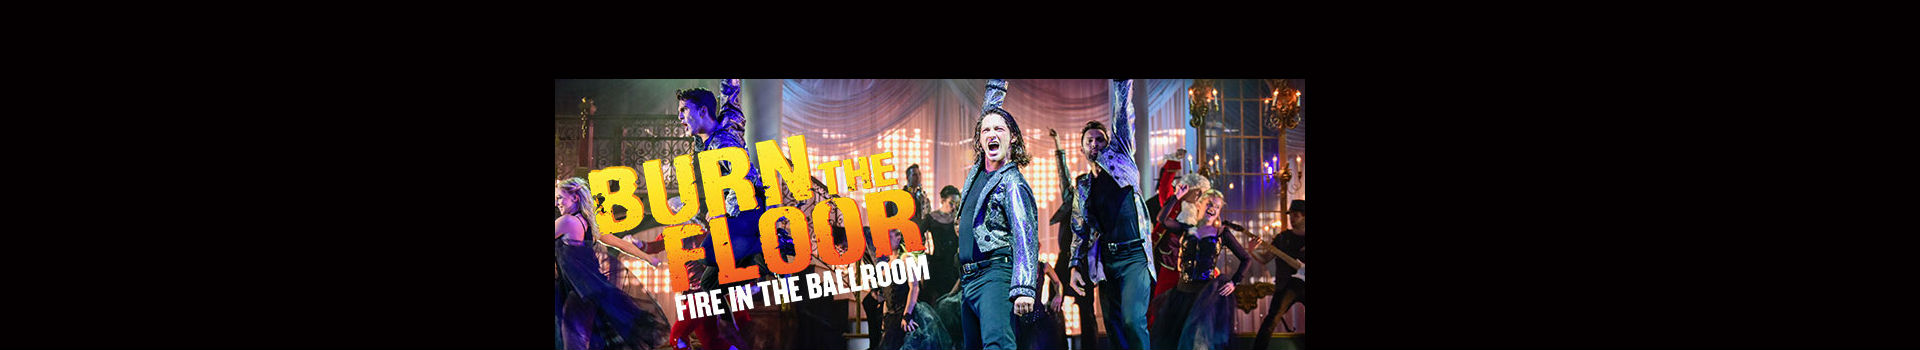 Burn the Floor — Fire in the Ballroom banner image